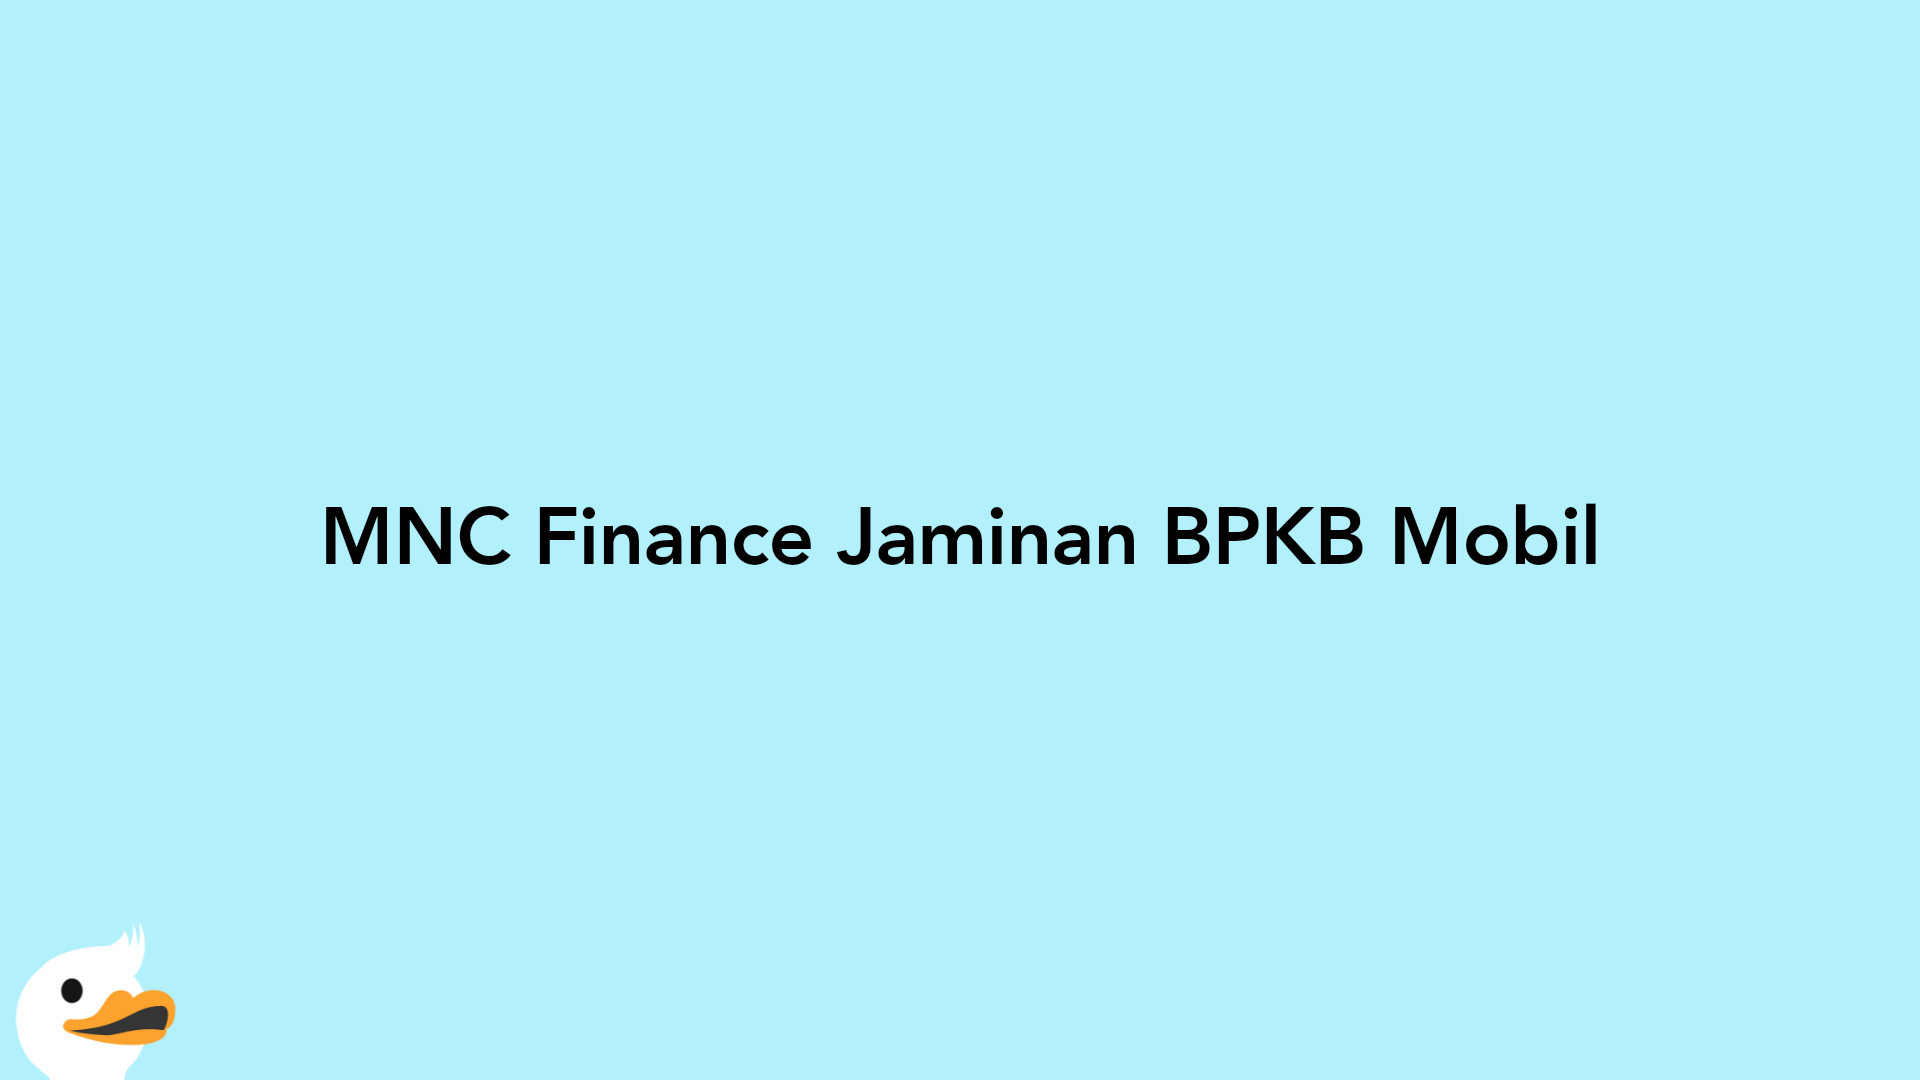 MNC Finance Jaminan BPKB Mobil